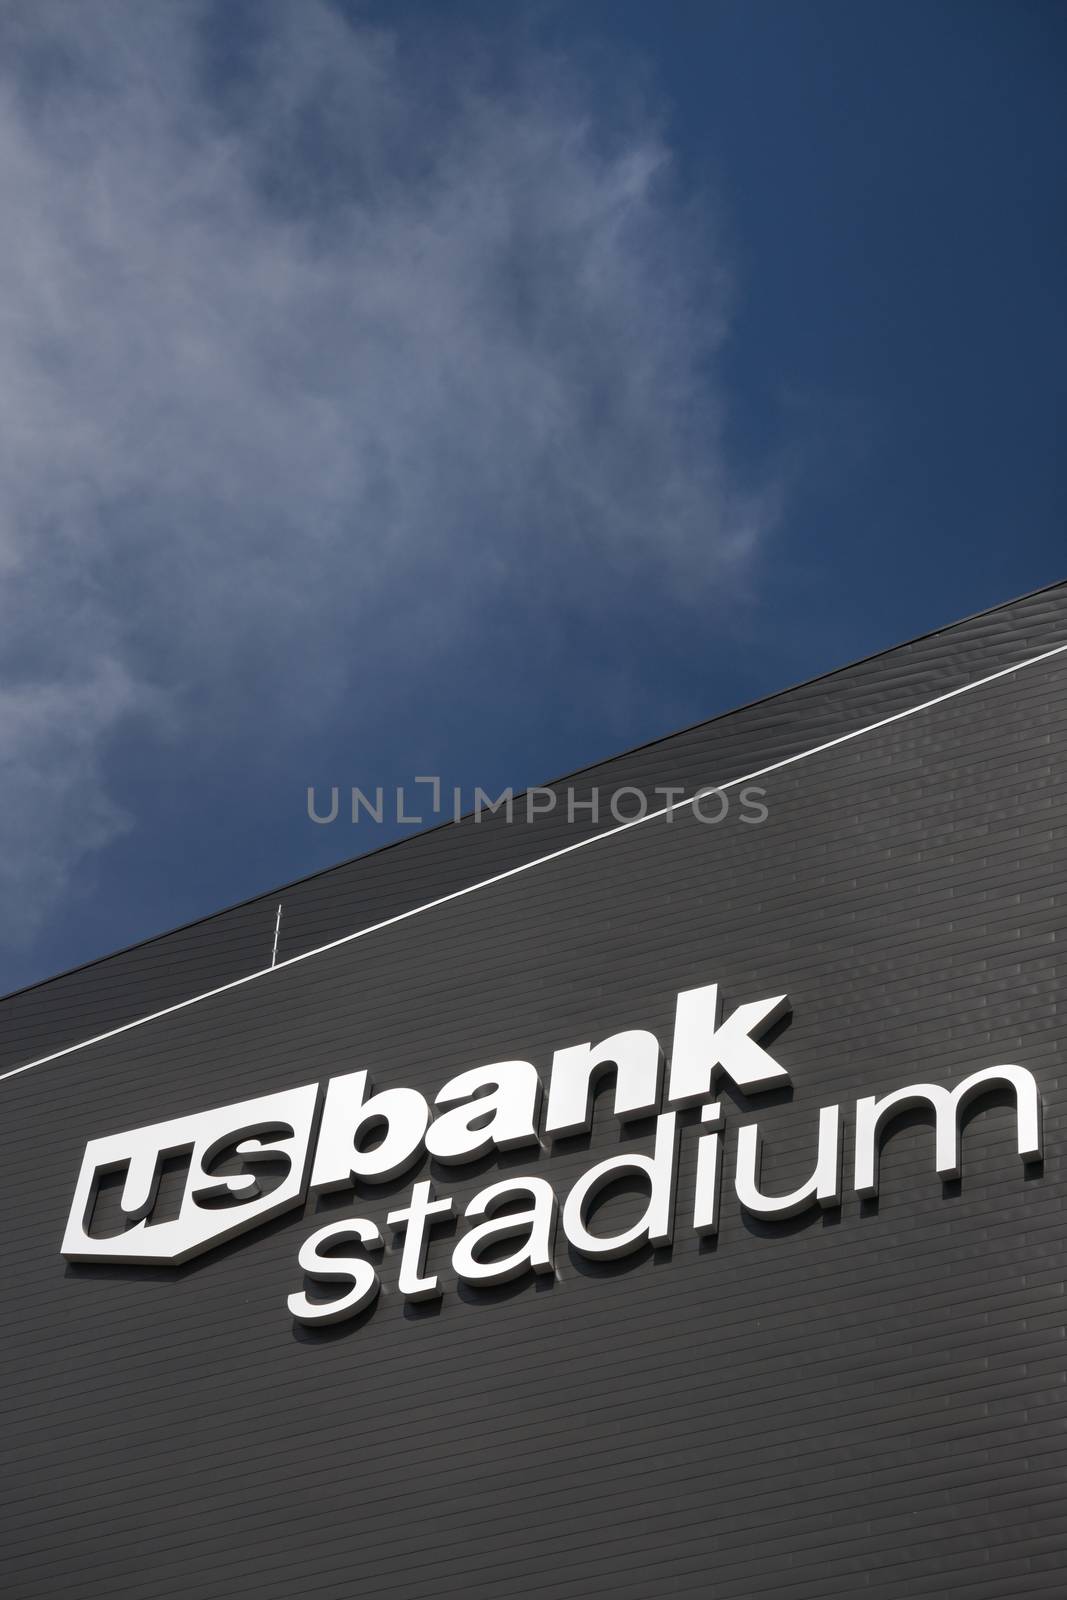 U.S. Bank Stadium by wolterk